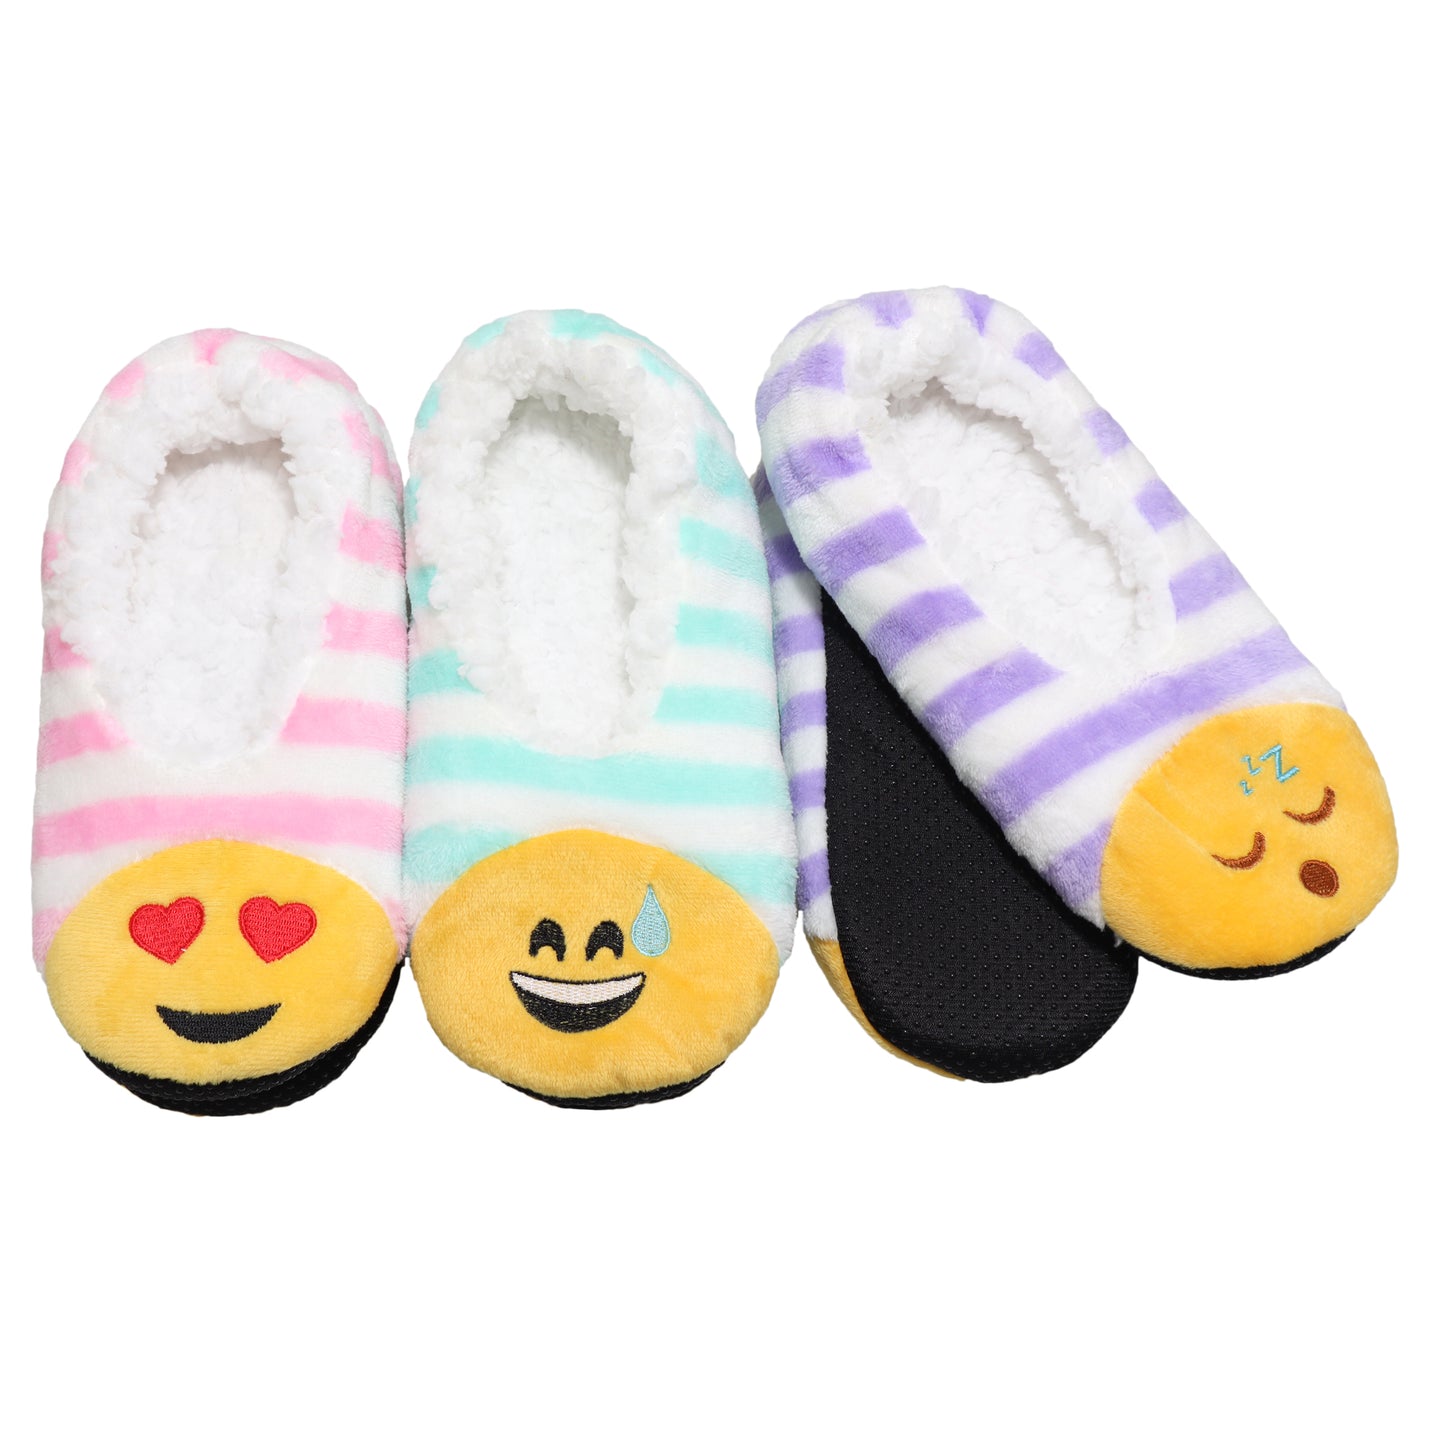 Winter-Weight Indoor Slipper Socks with Emoji Design (3-Pairs)